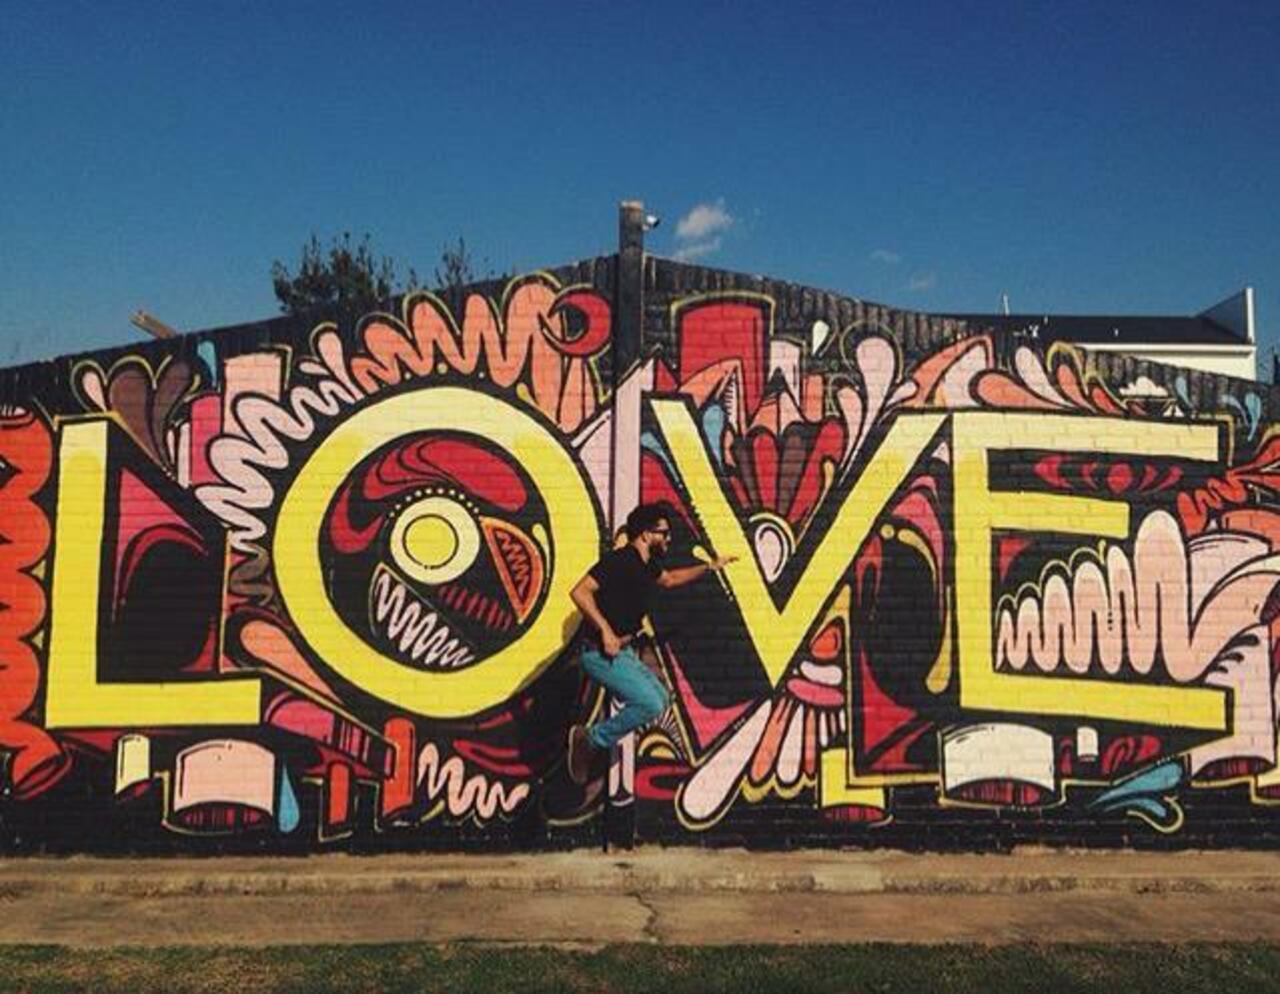 Love ❤️
Street Art by WileyArt

#art #graffiti #mural #streetart http://t.co/2tsYS4AkFm